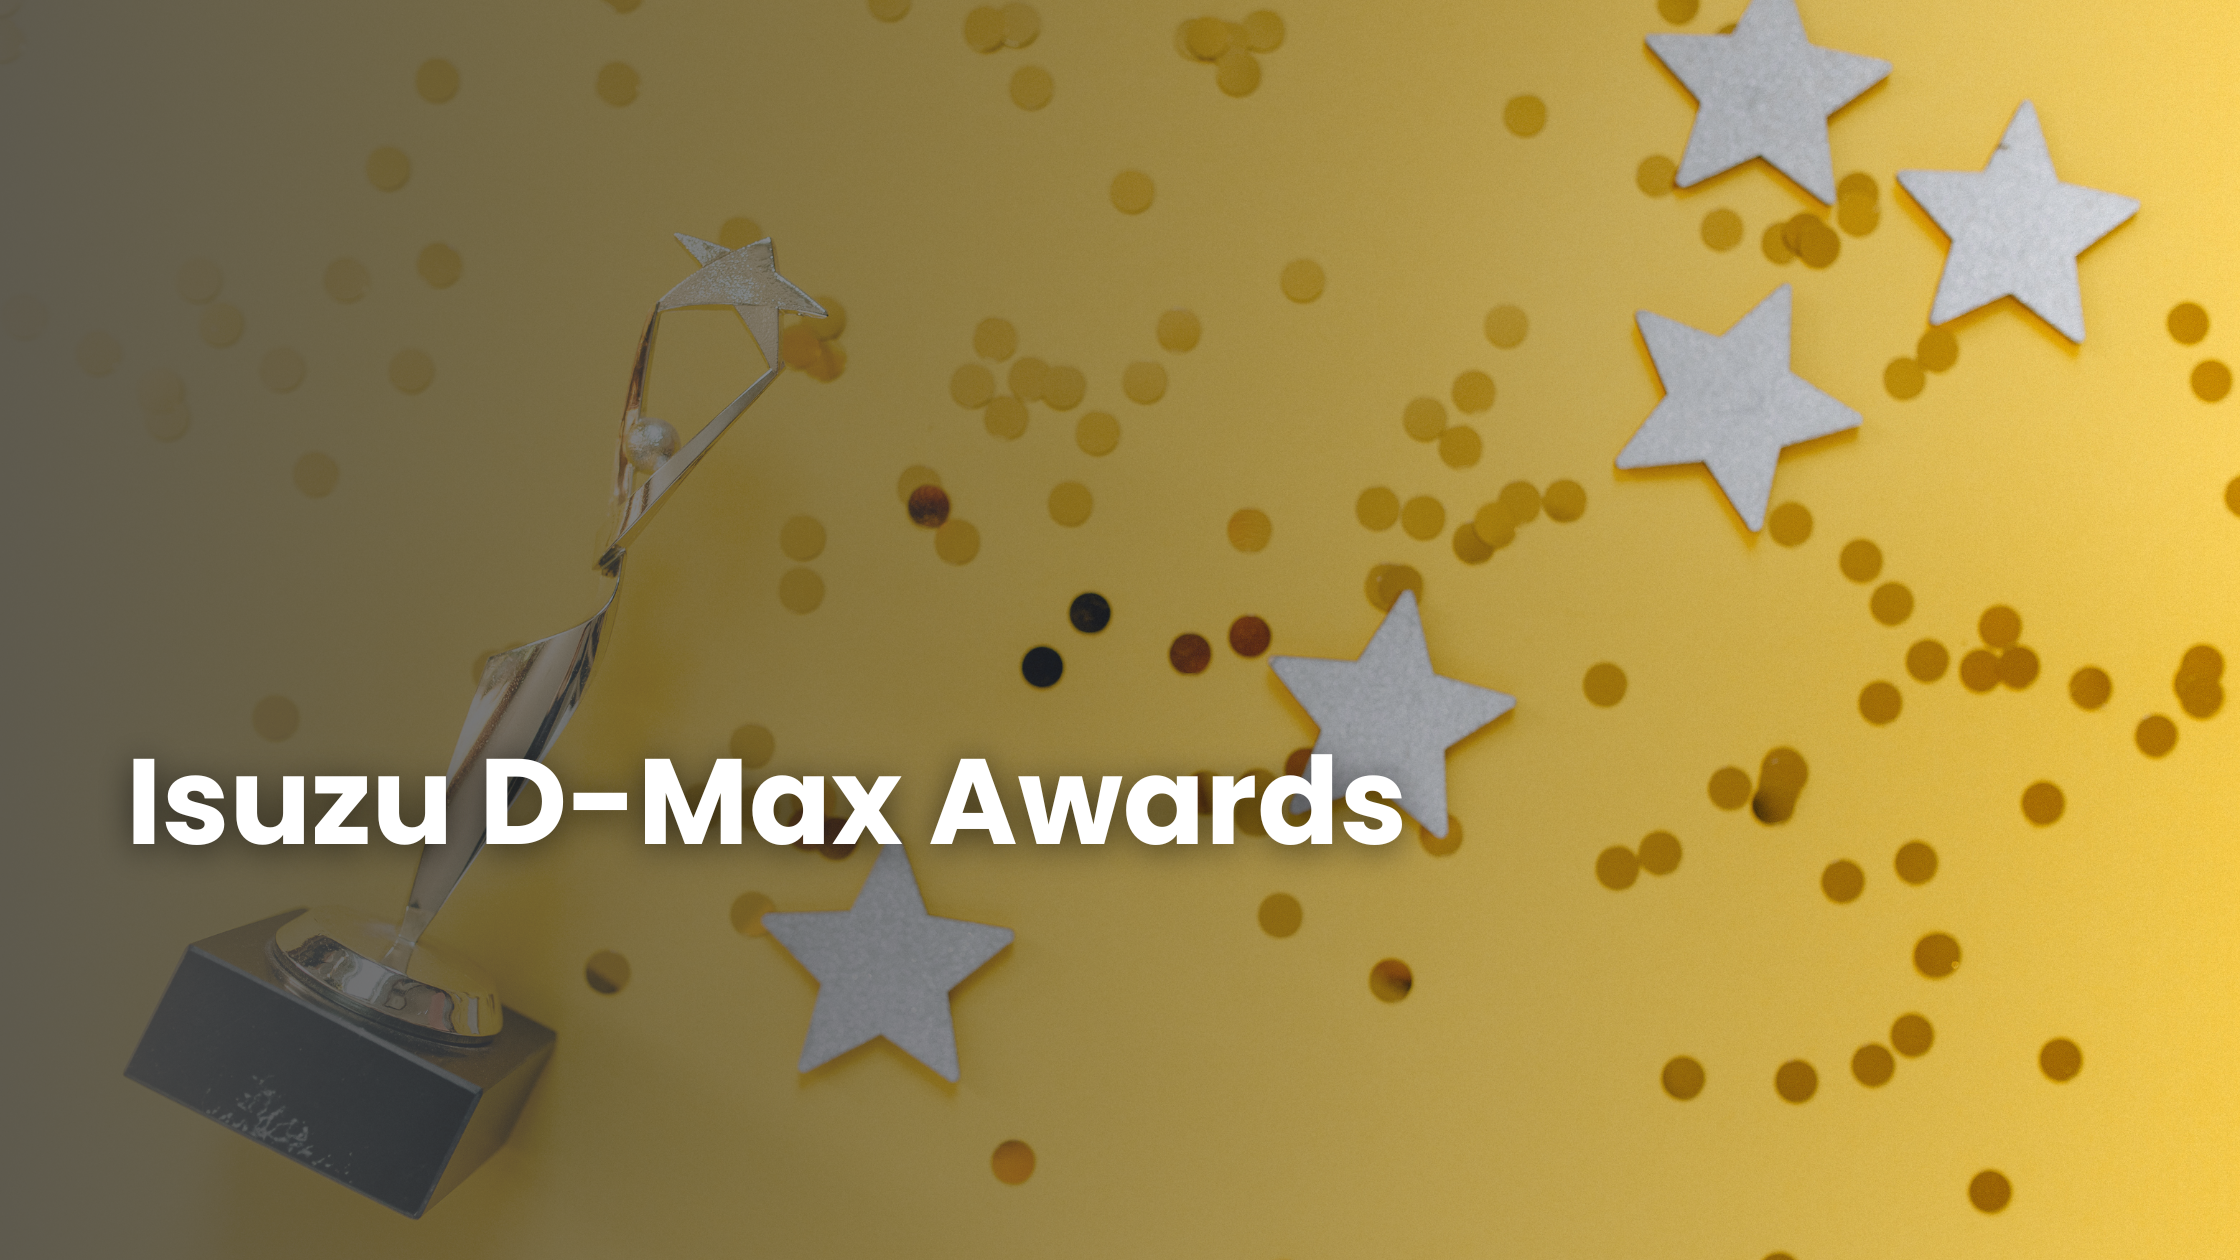 Isuzu D-Max Awards